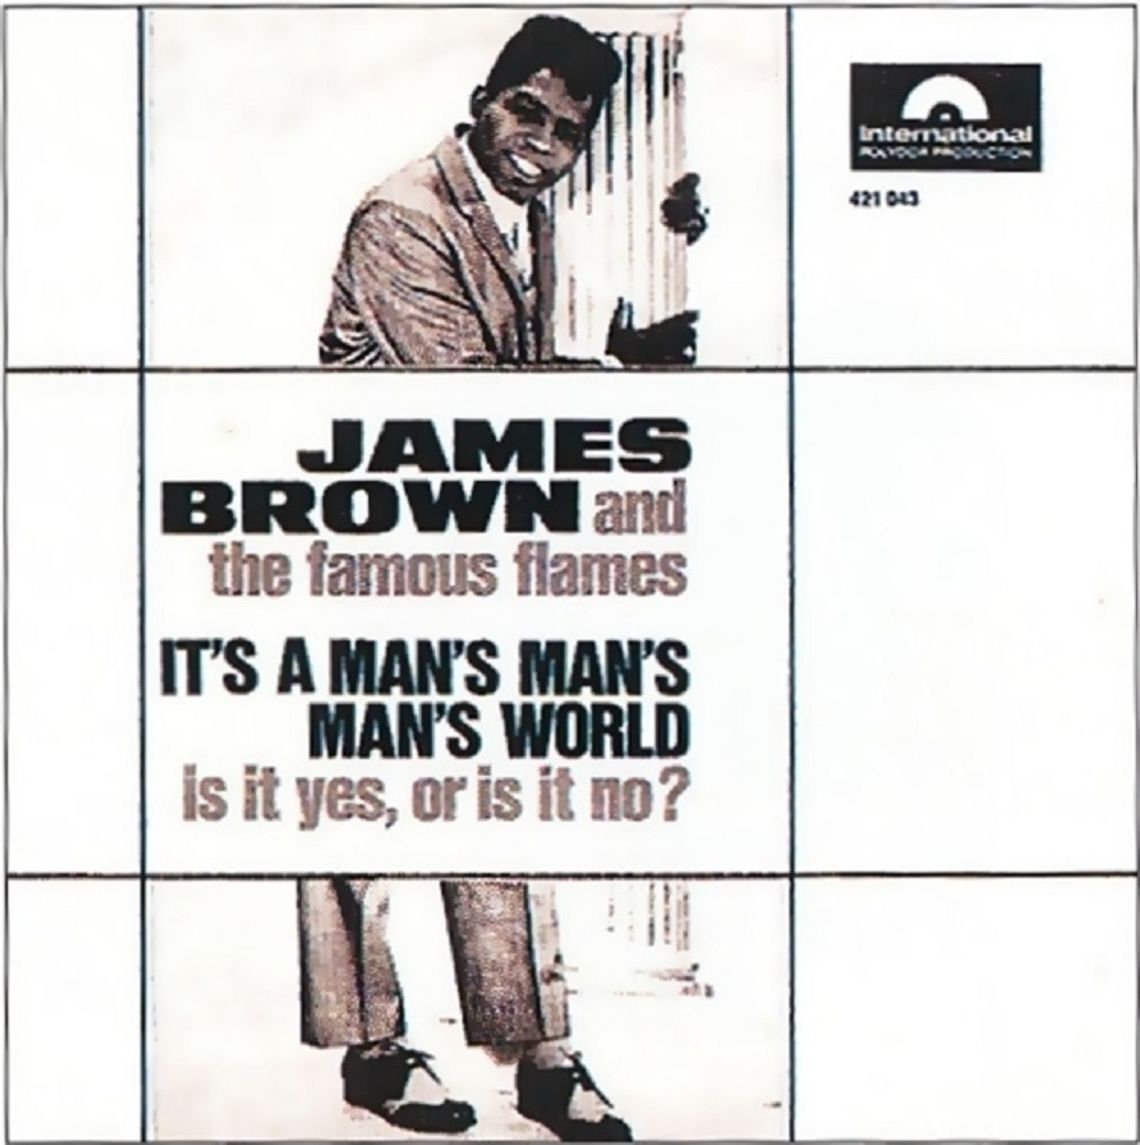 JAMES BROWN "It's a man's man's man's world"